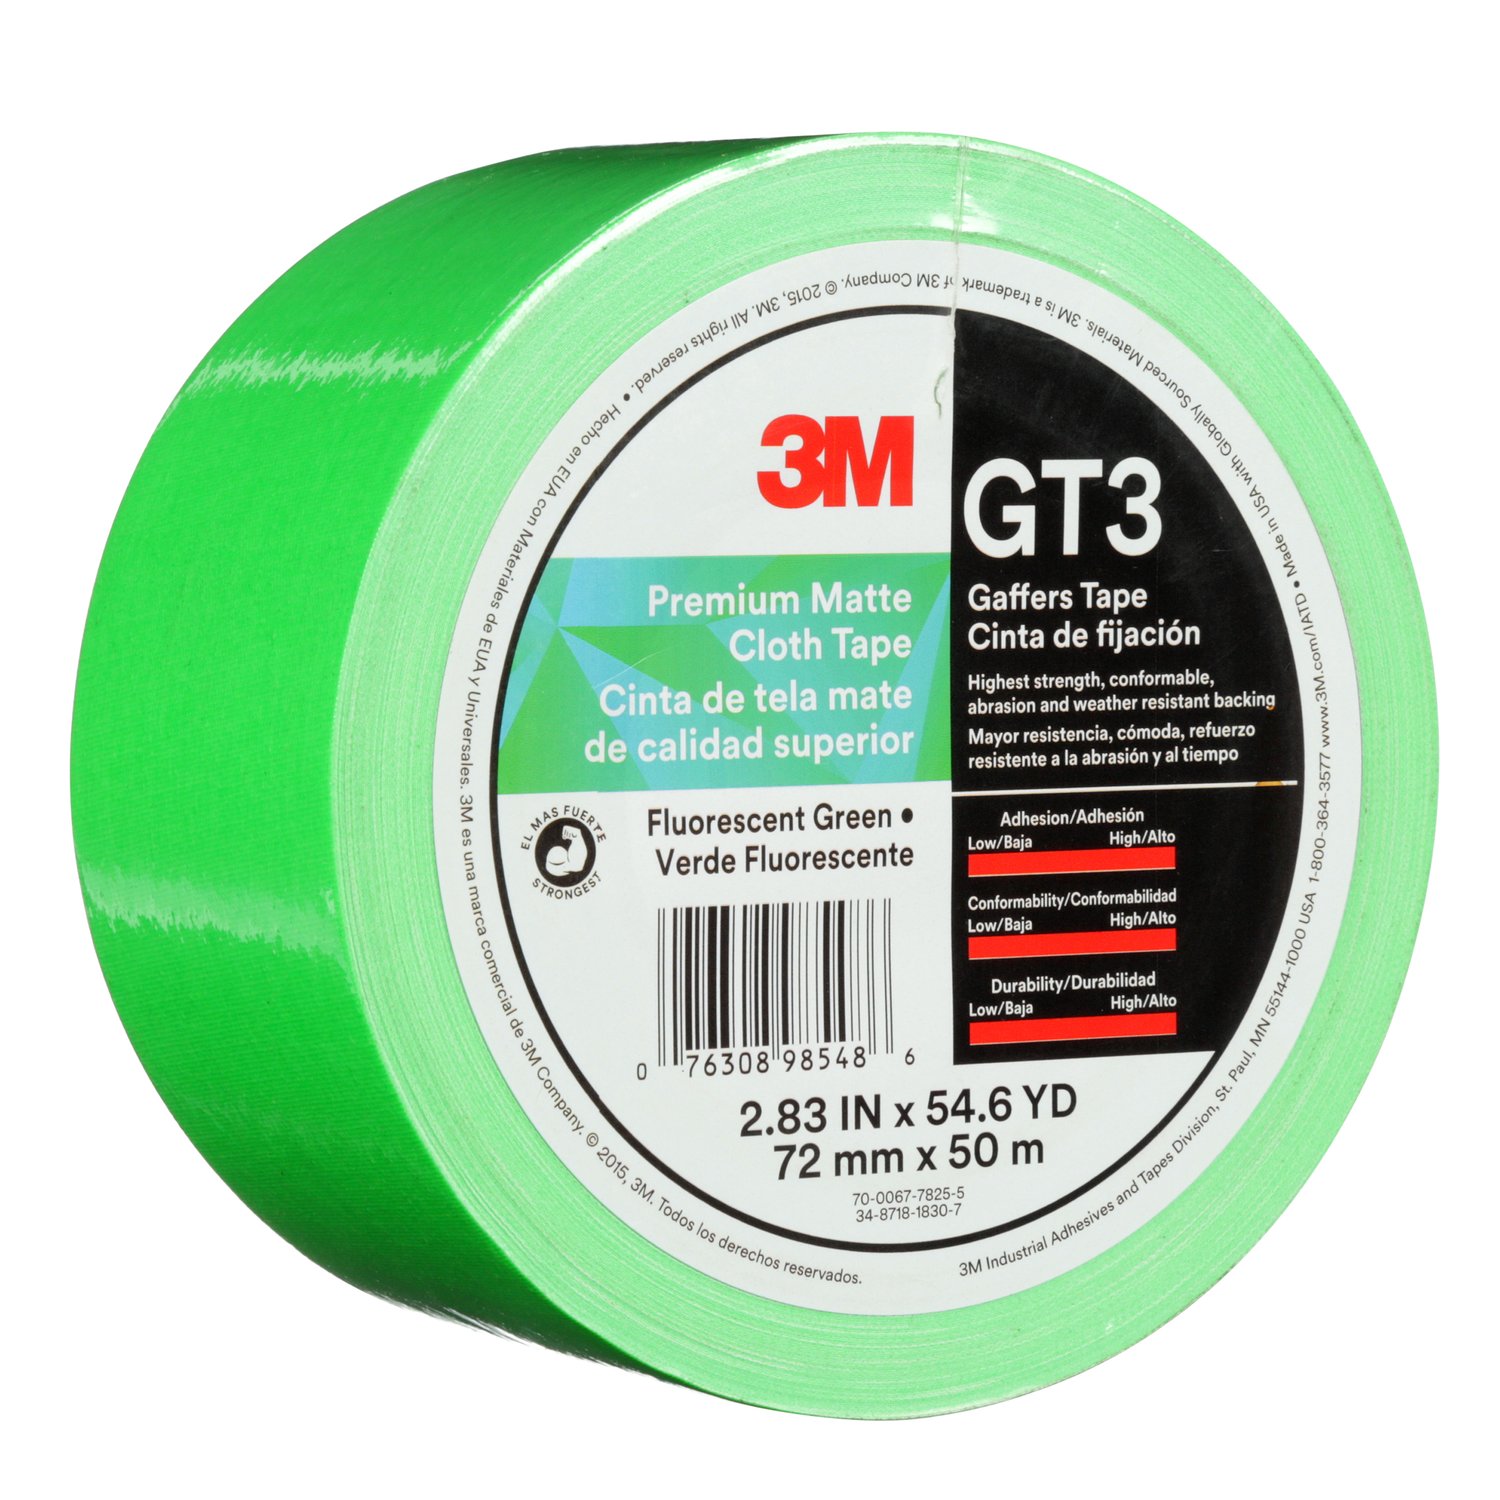 7010336141 - 3M Premium Matte Cloth (Gaffers) Tape GT3, Fluorescent Green, 72 mm x
50 m, 11 mil, 16/Case